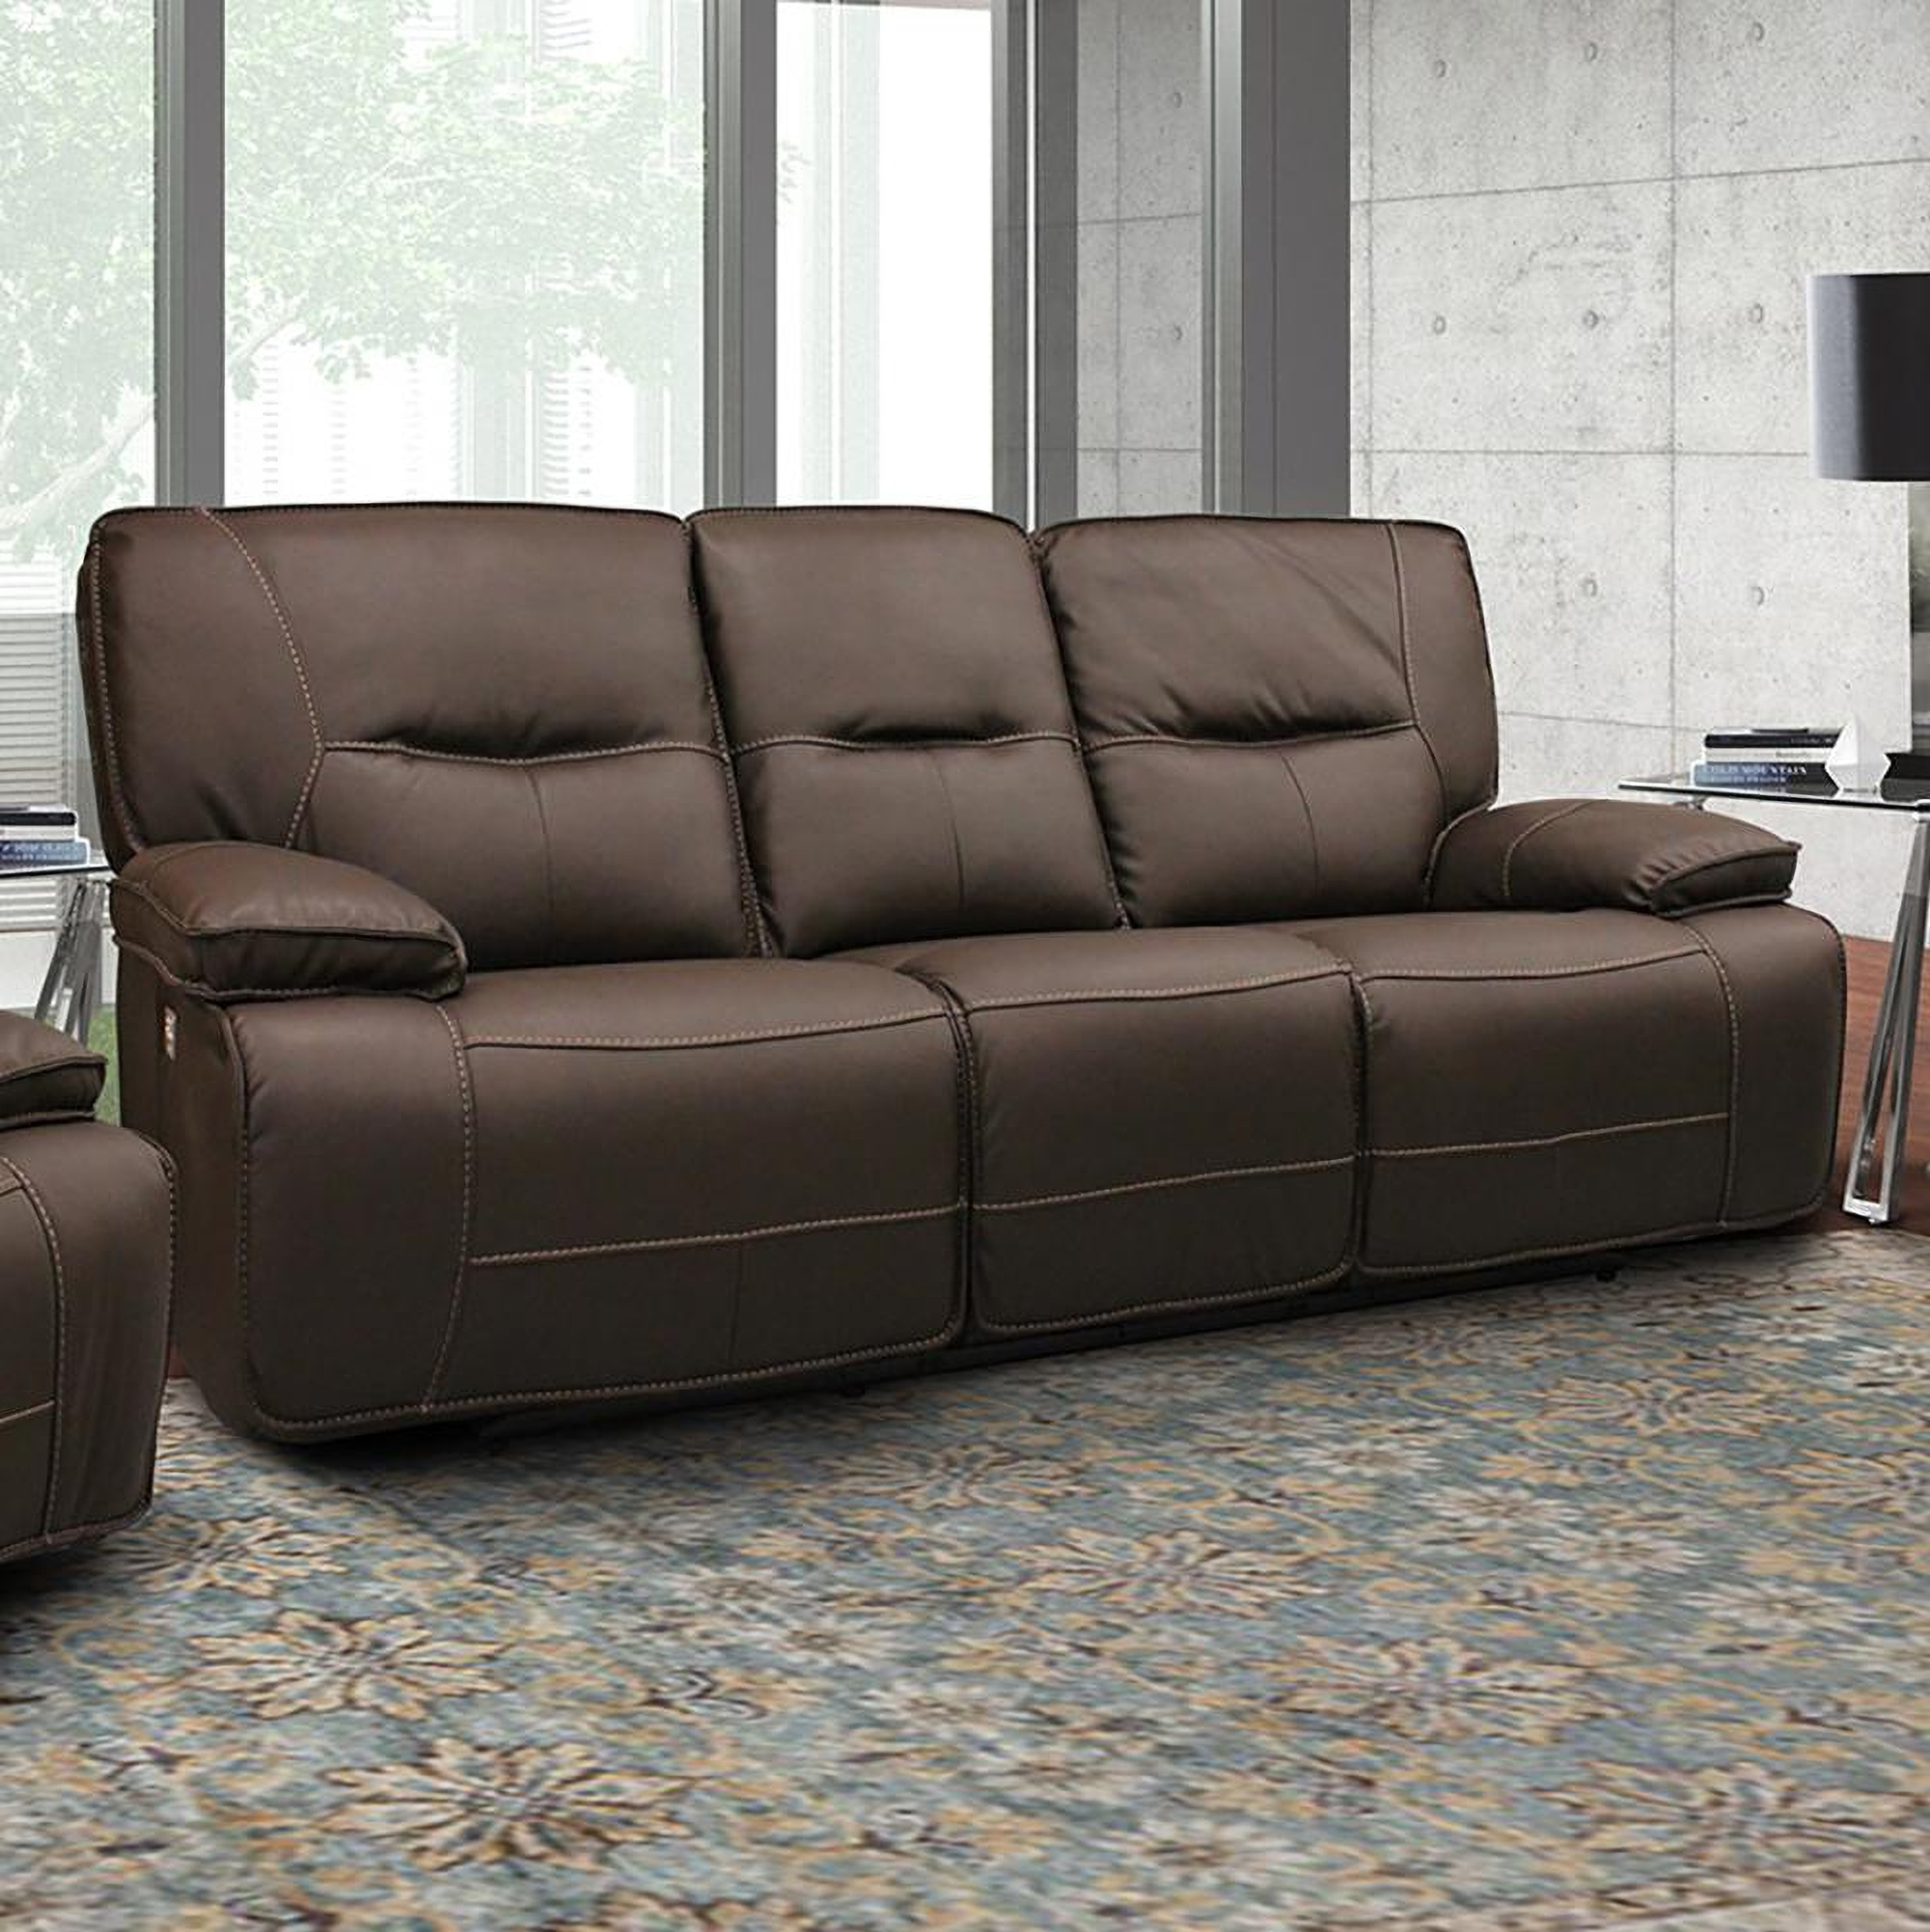 https://cdn.1stopbedrooms.com/media/catalog/product/s/p/spartacus-chocolate-dual-power-reclining-sofa-with-power-headrest_qb1252800.jpg